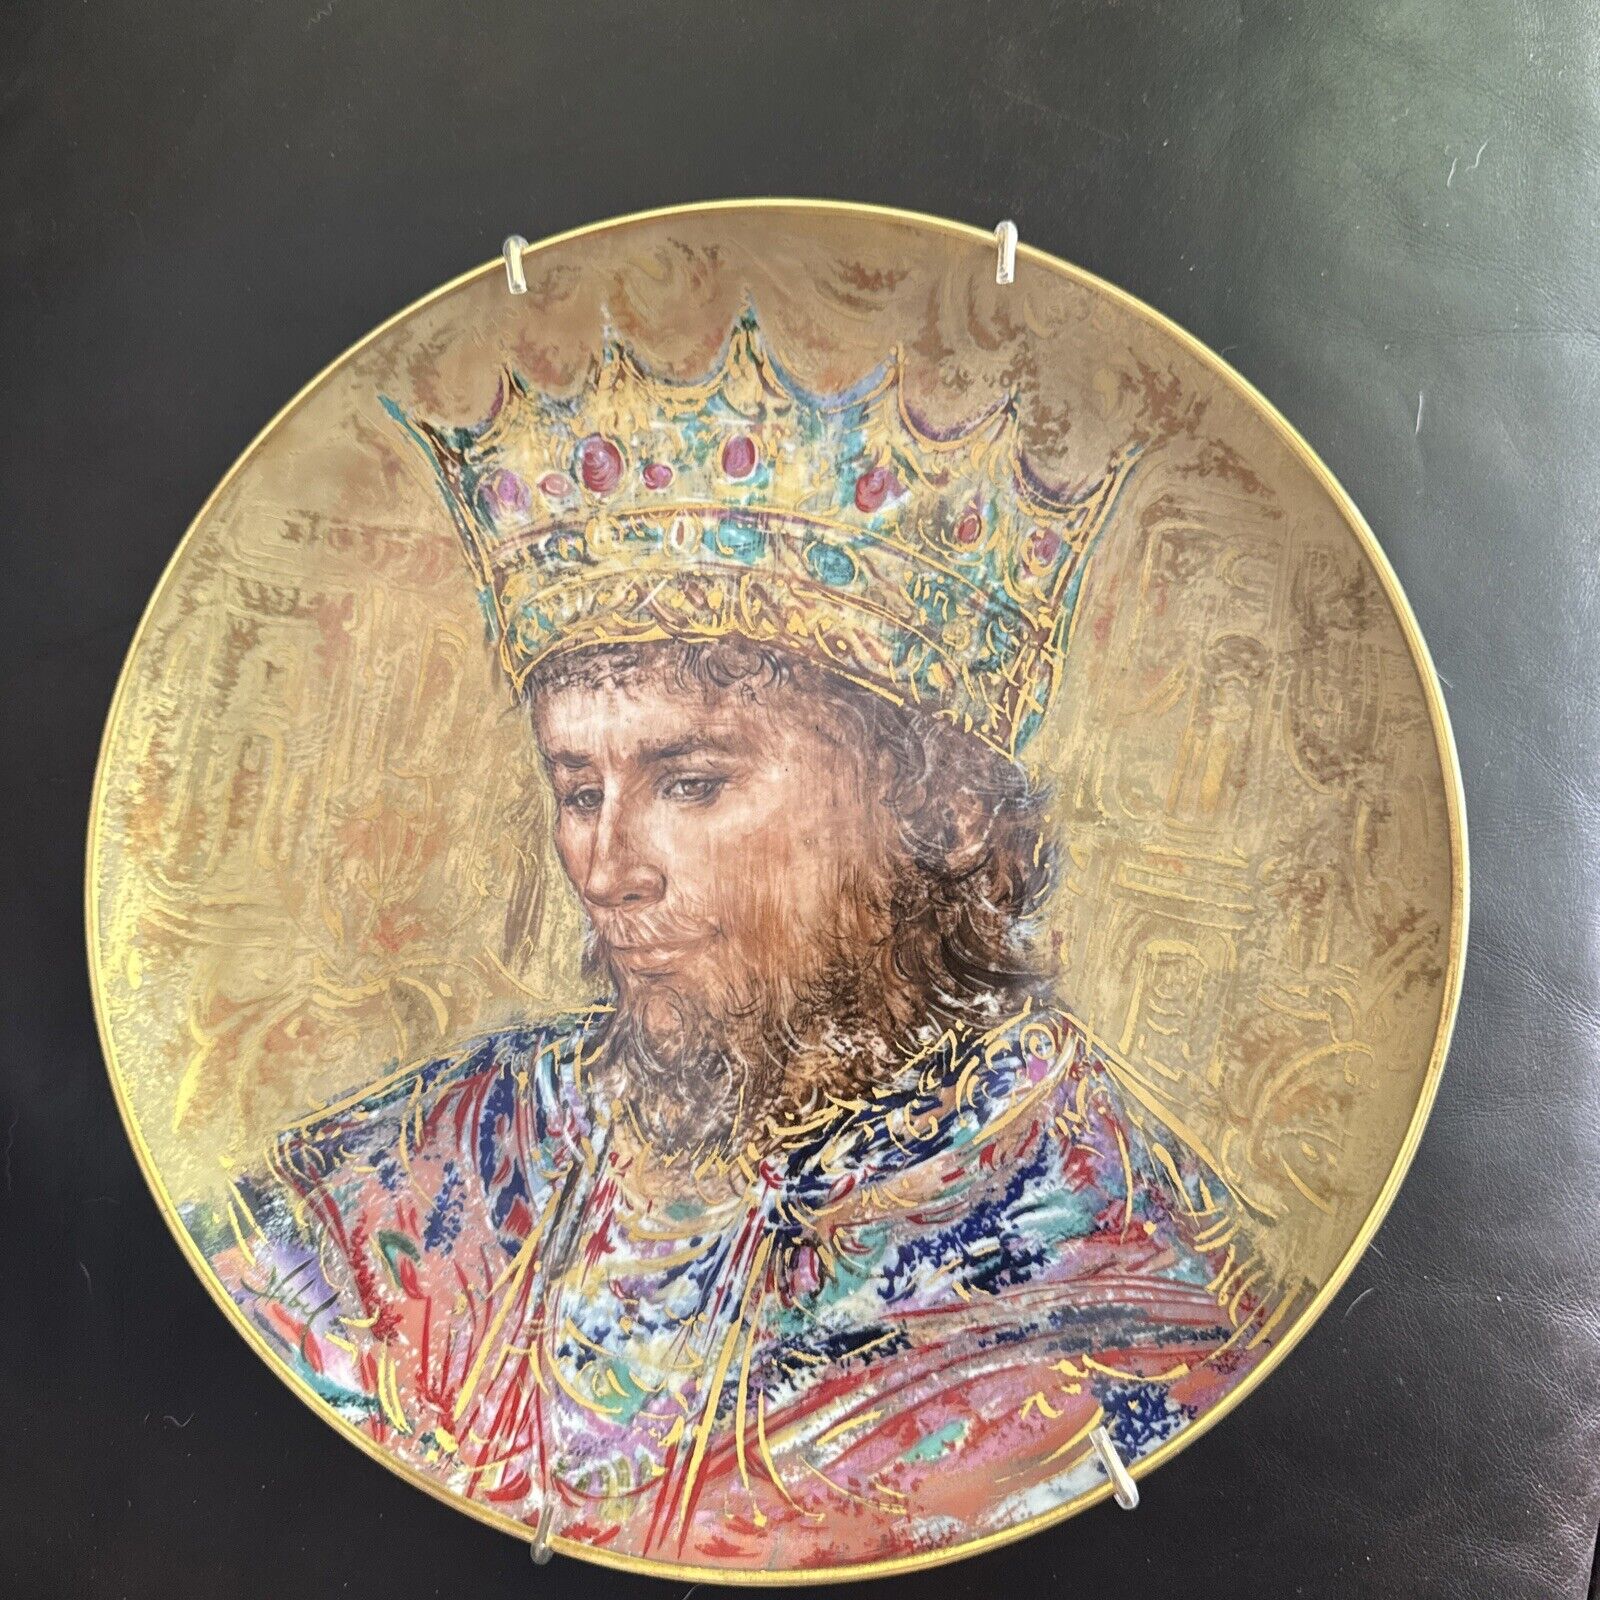 New Edna Hibel Plate David the King Gold #4336